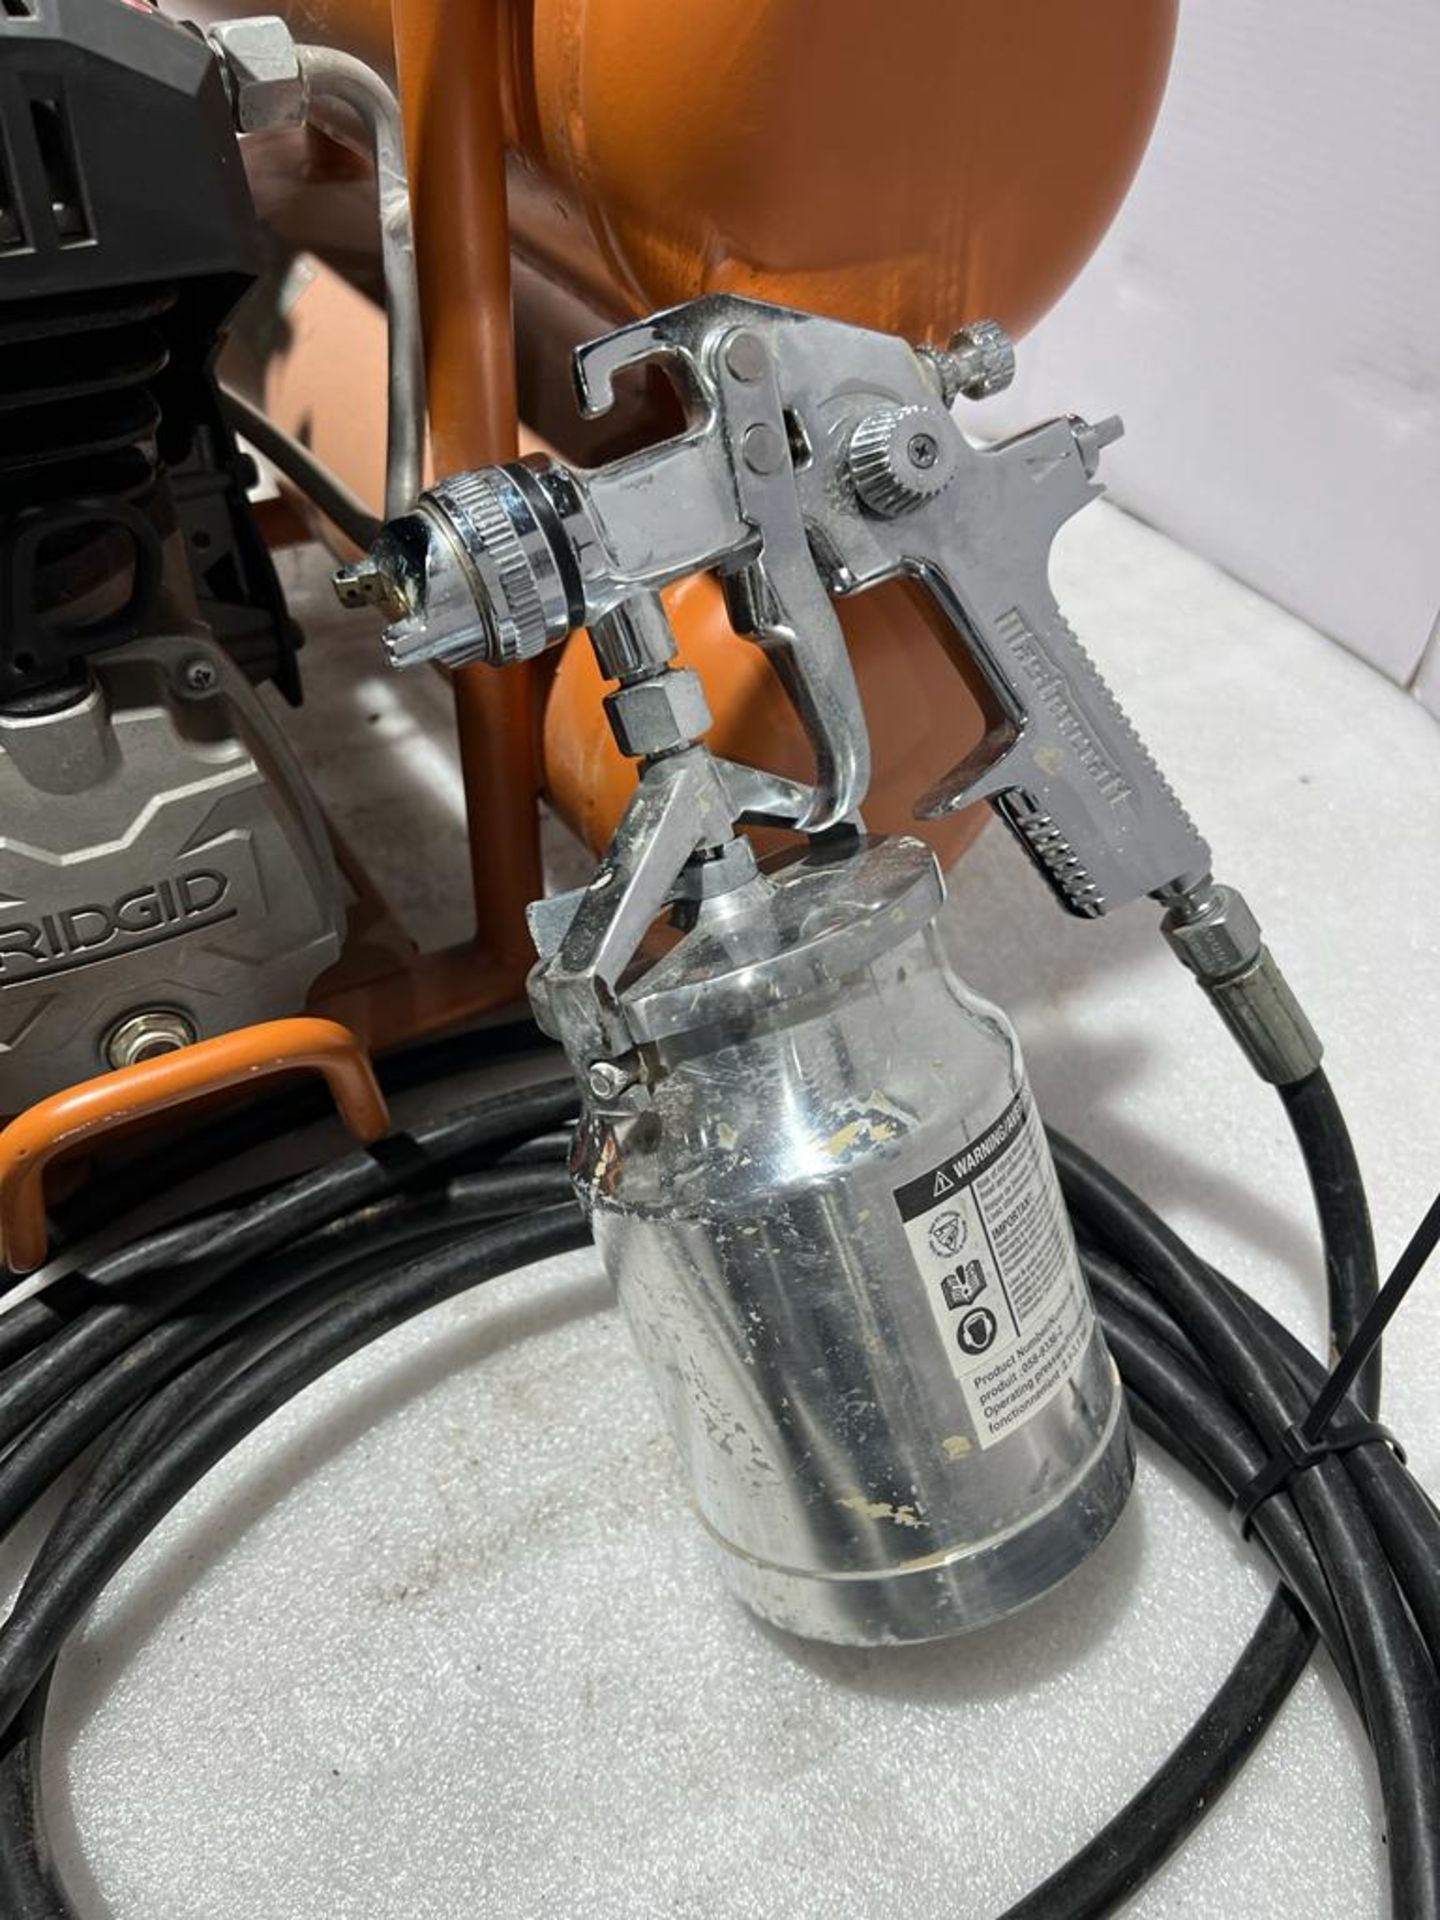 Ridgid Portable Shop Air Compressor with Pneumatic Spray Paint Gun - Image 2 of 4